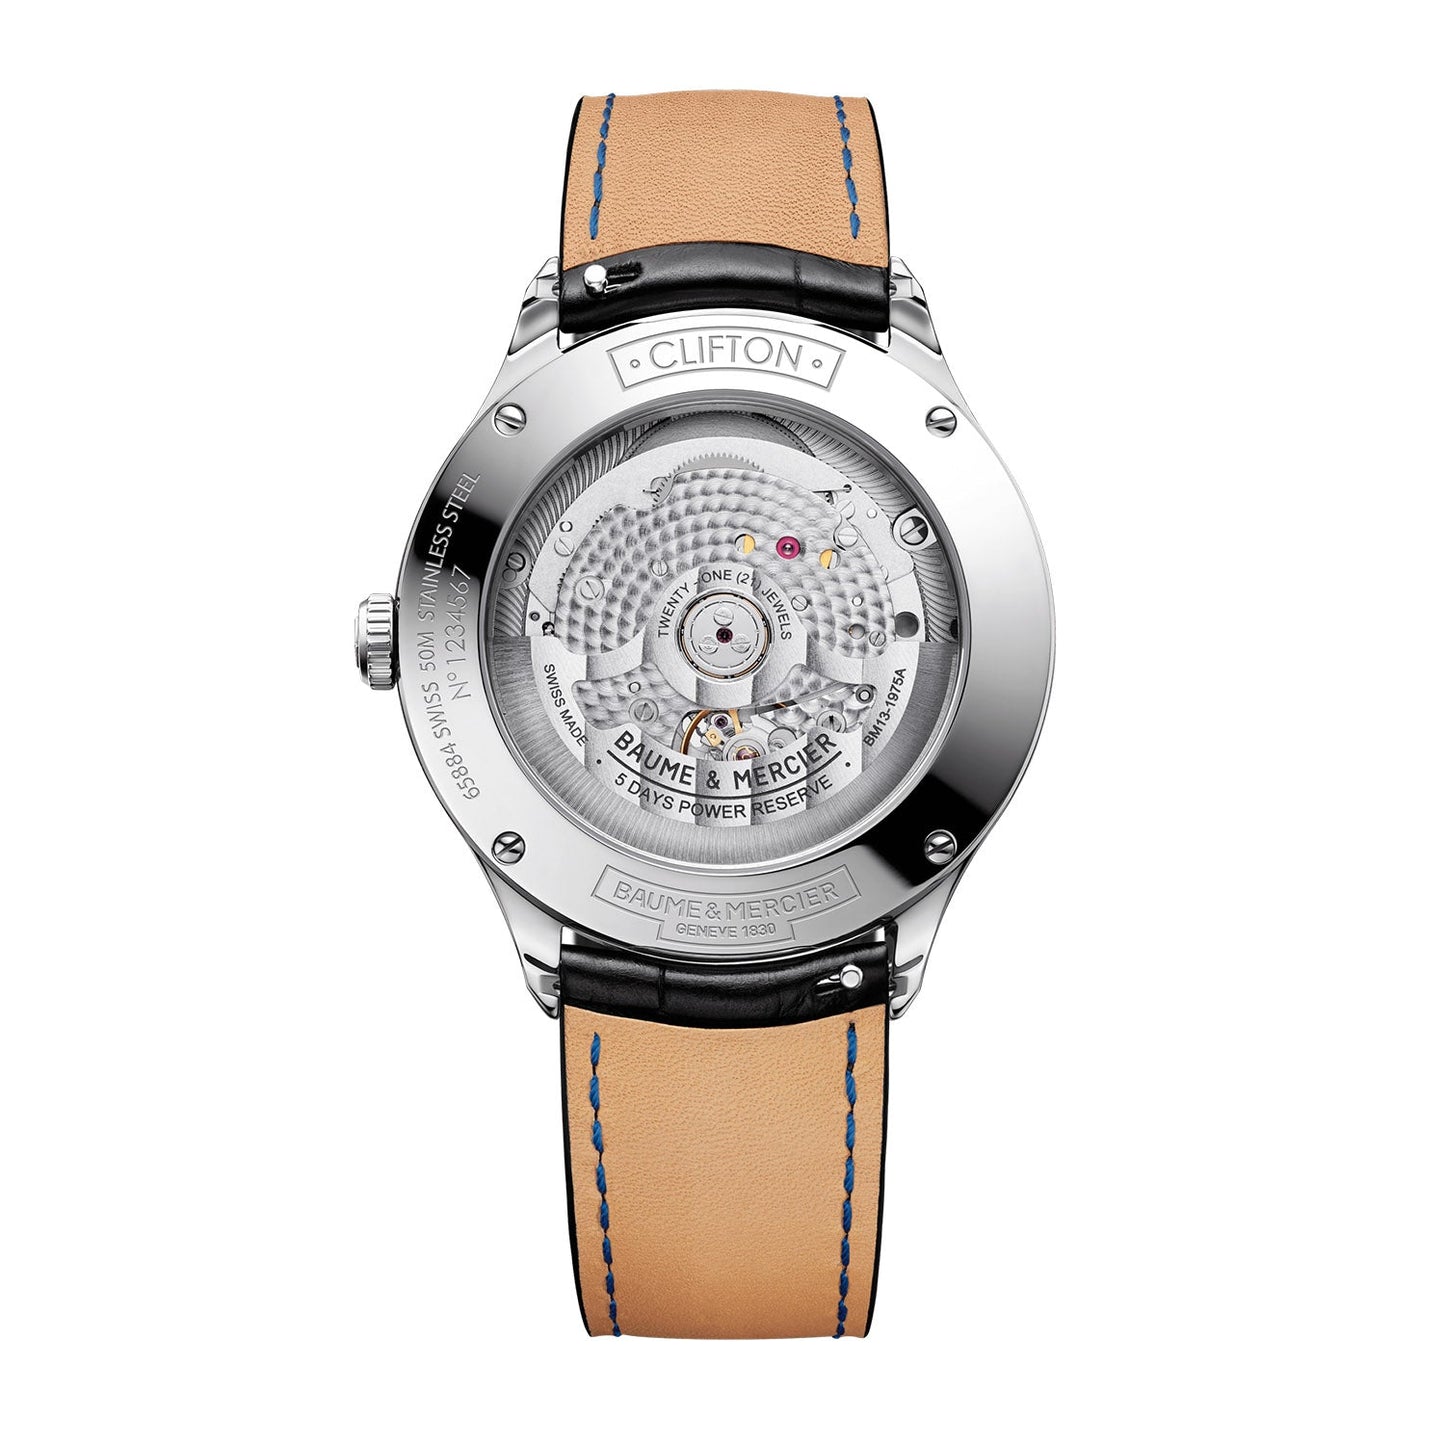 Baume & Mercier Clifton Baumatic, COSC Certified Men's Watch 40mm